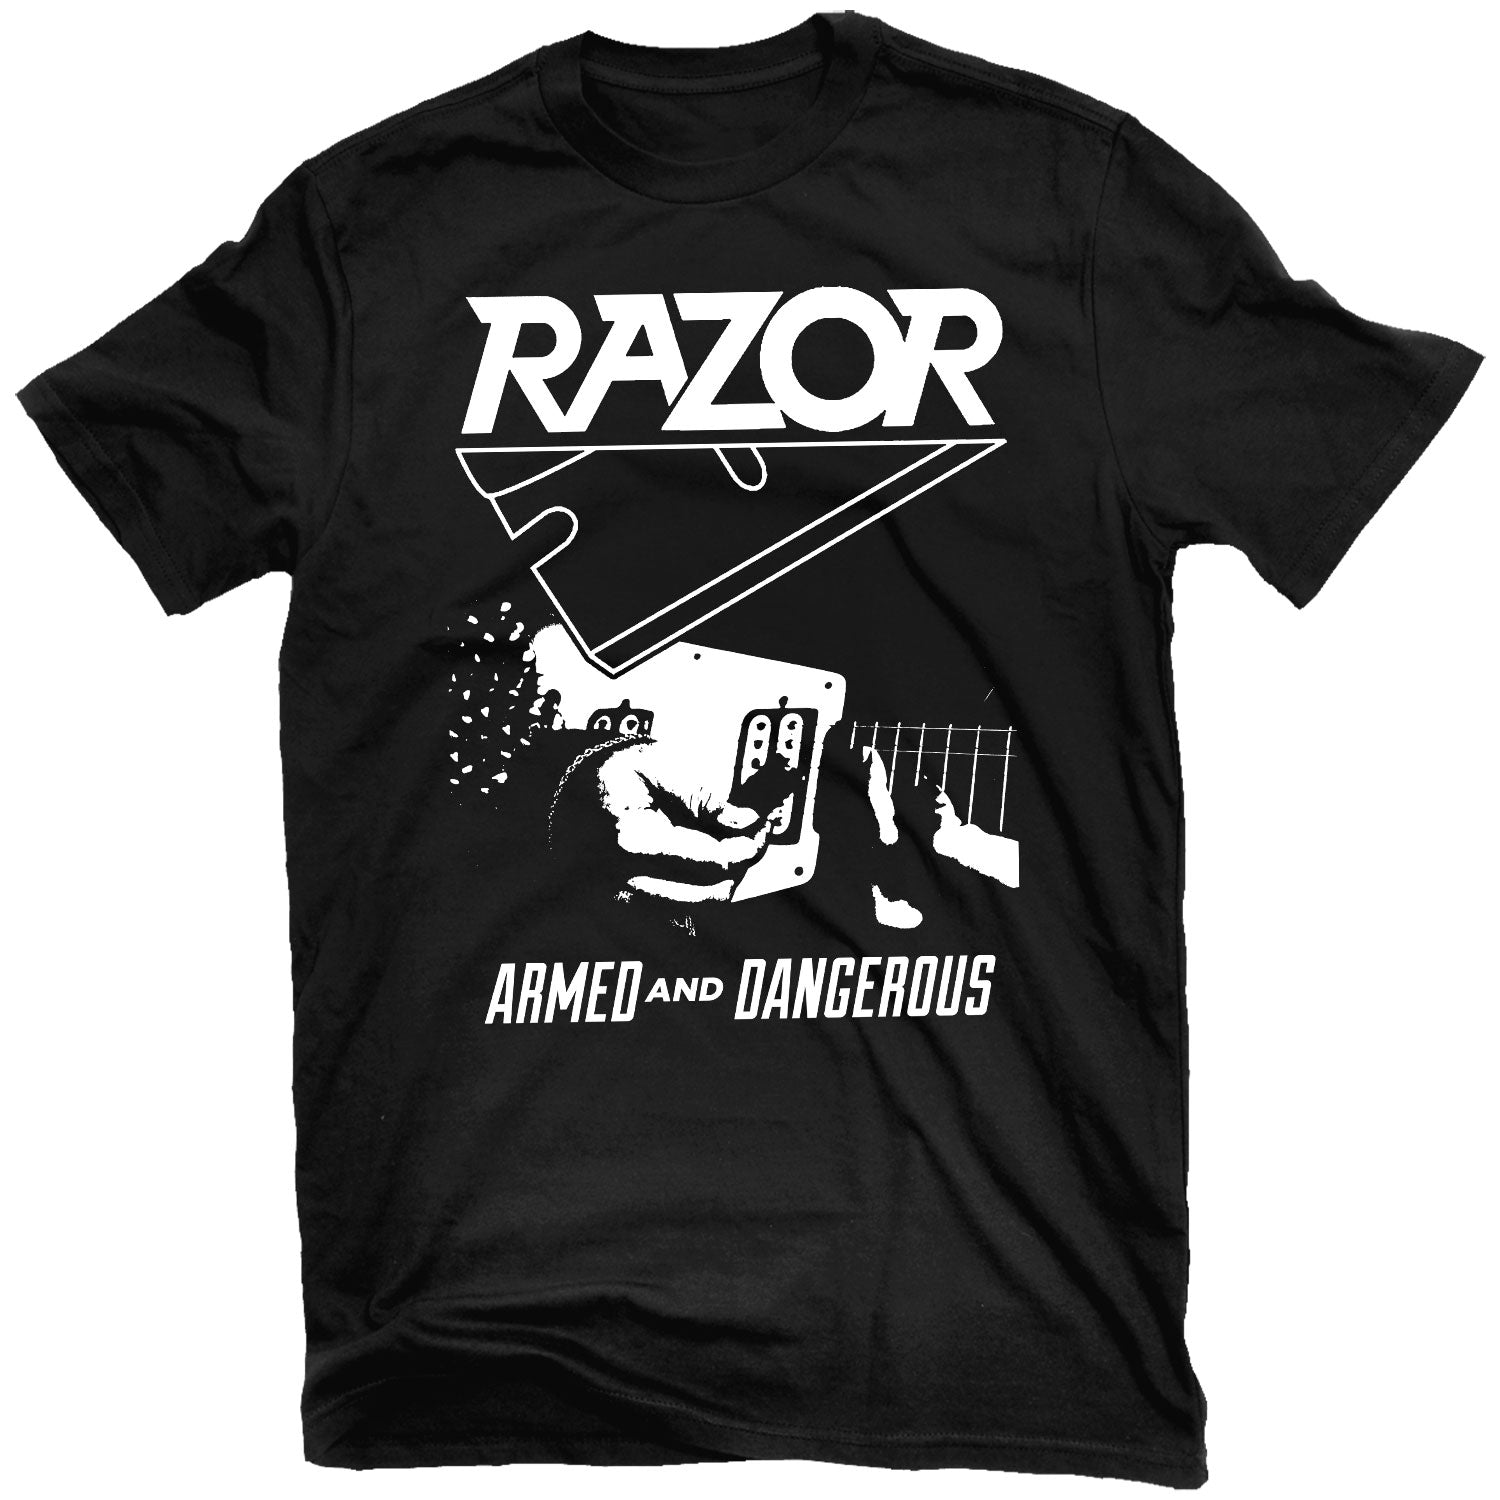 Razor "Armed and Dangerous" T-Shirt